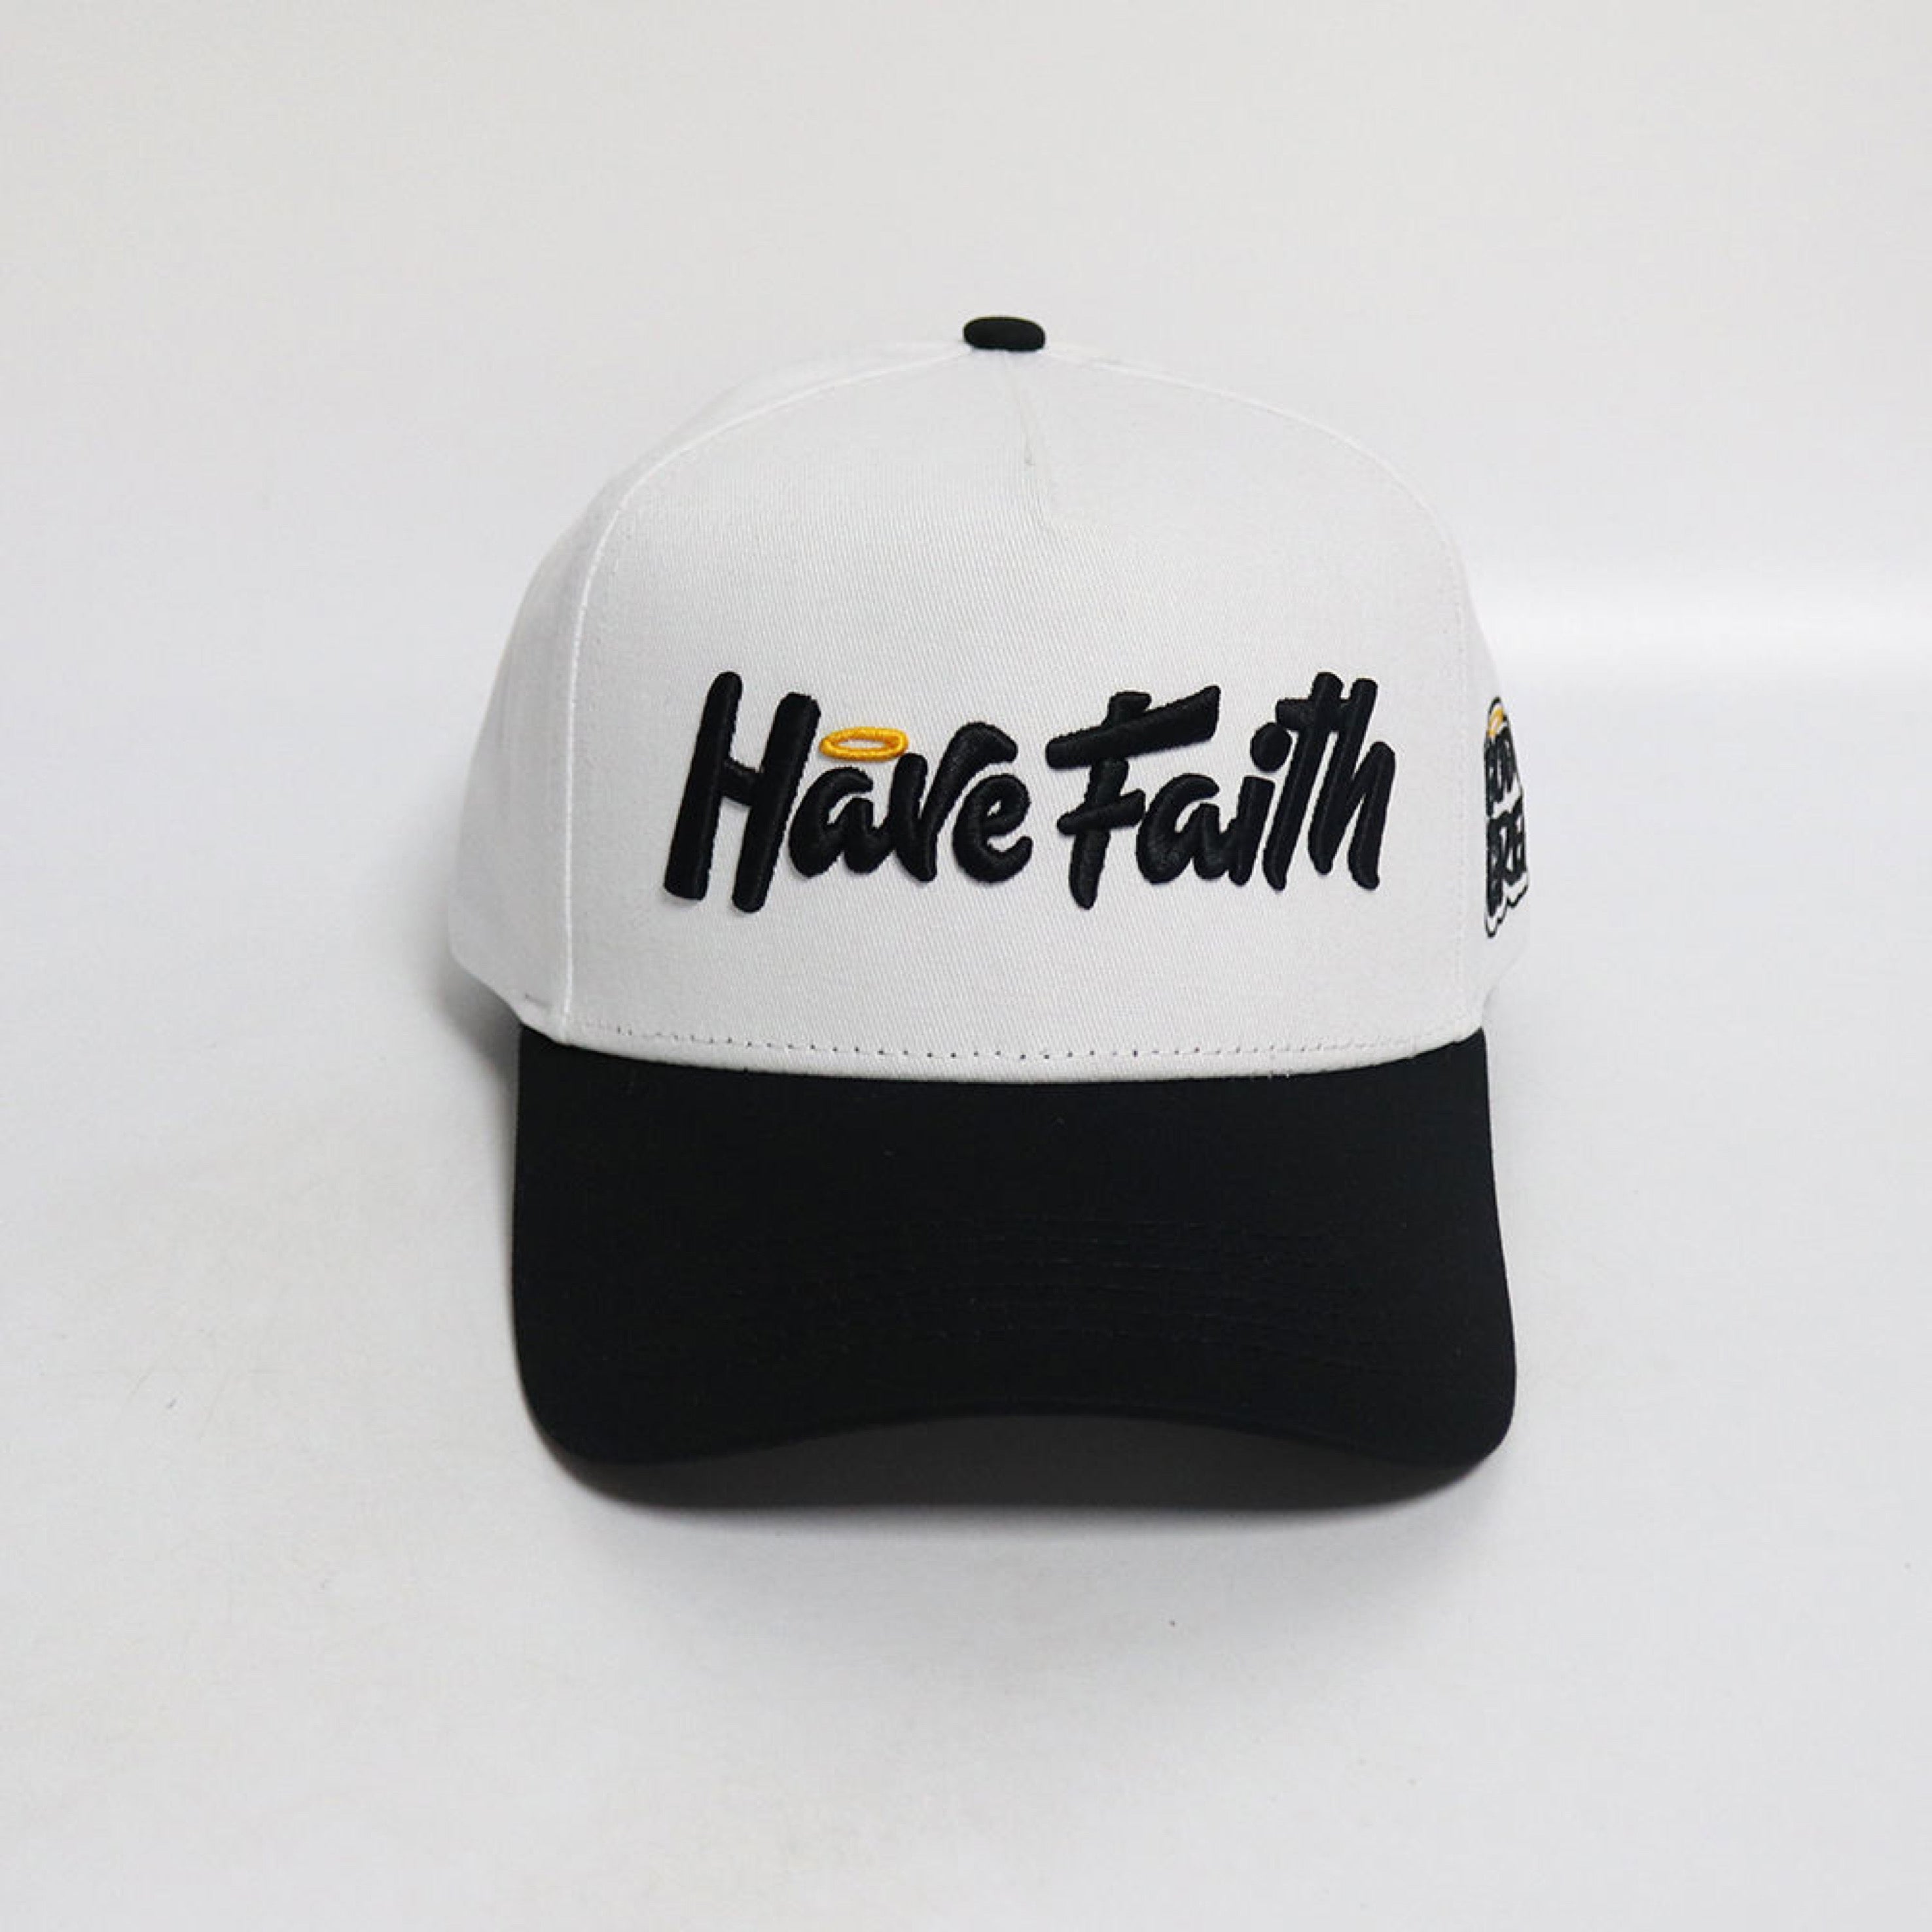 HAVE FAITH HAT-BLACK